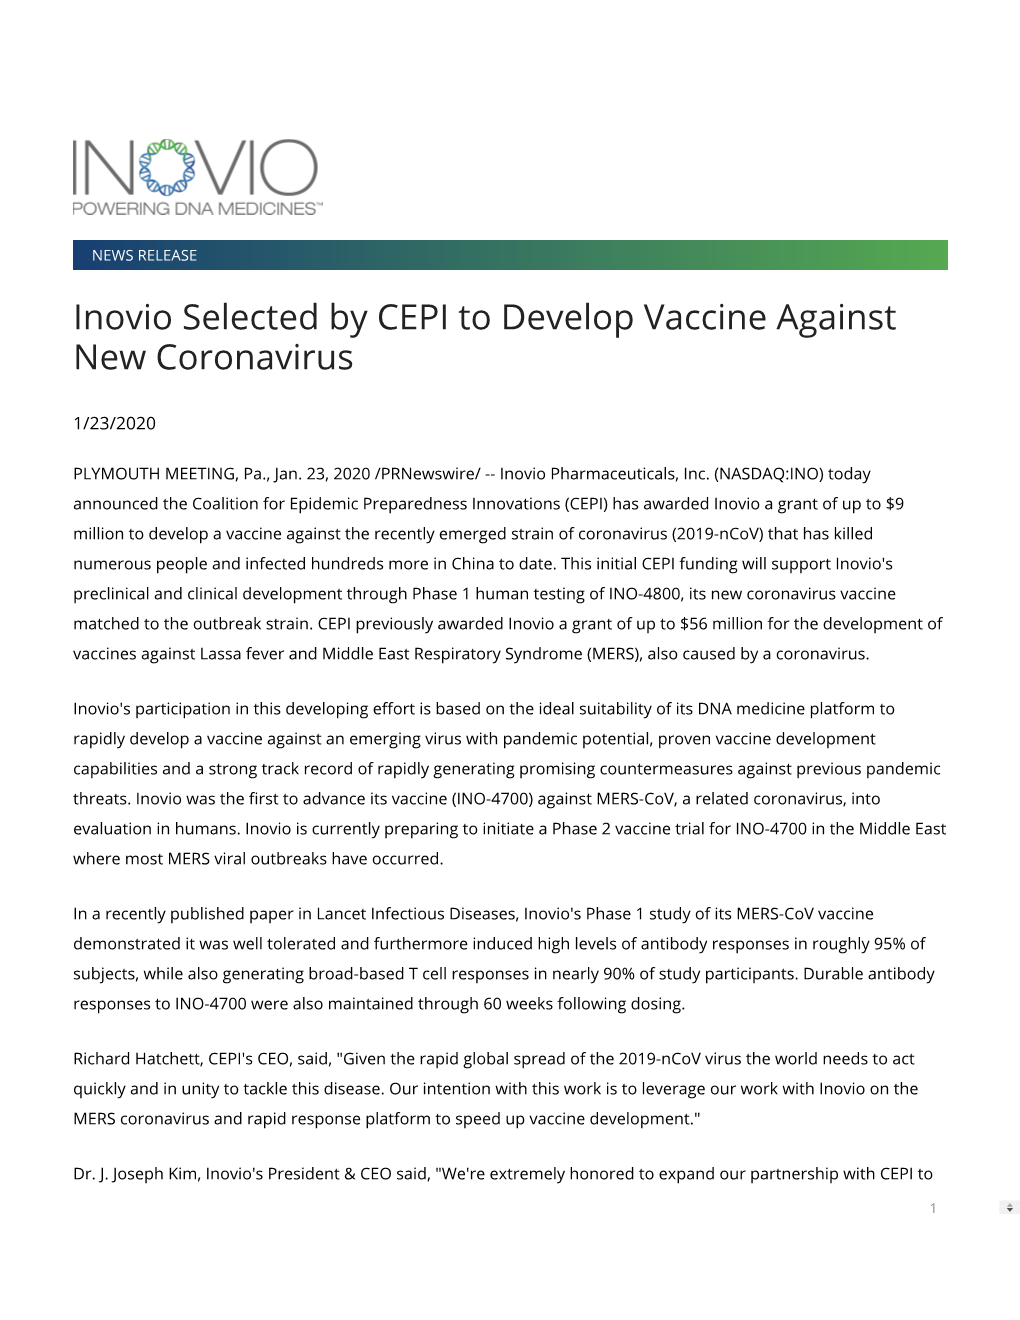 Inovio Selected by CEPI to Develop Vaccine Against New Coronavirus